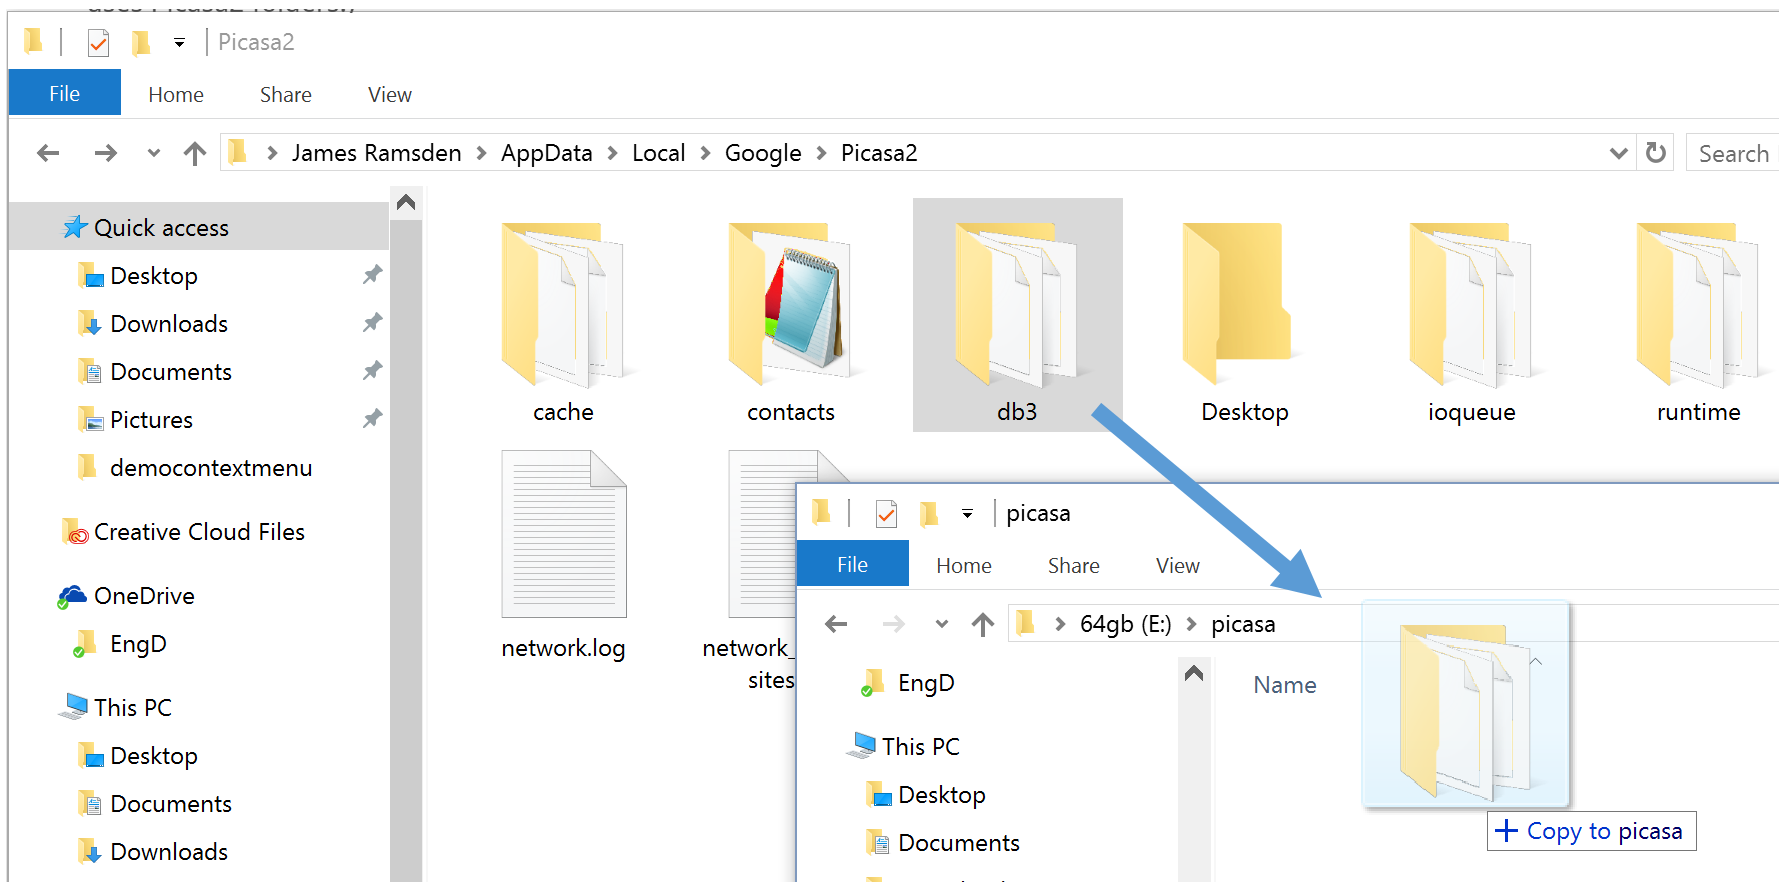 google drive sync folders from mac to drive